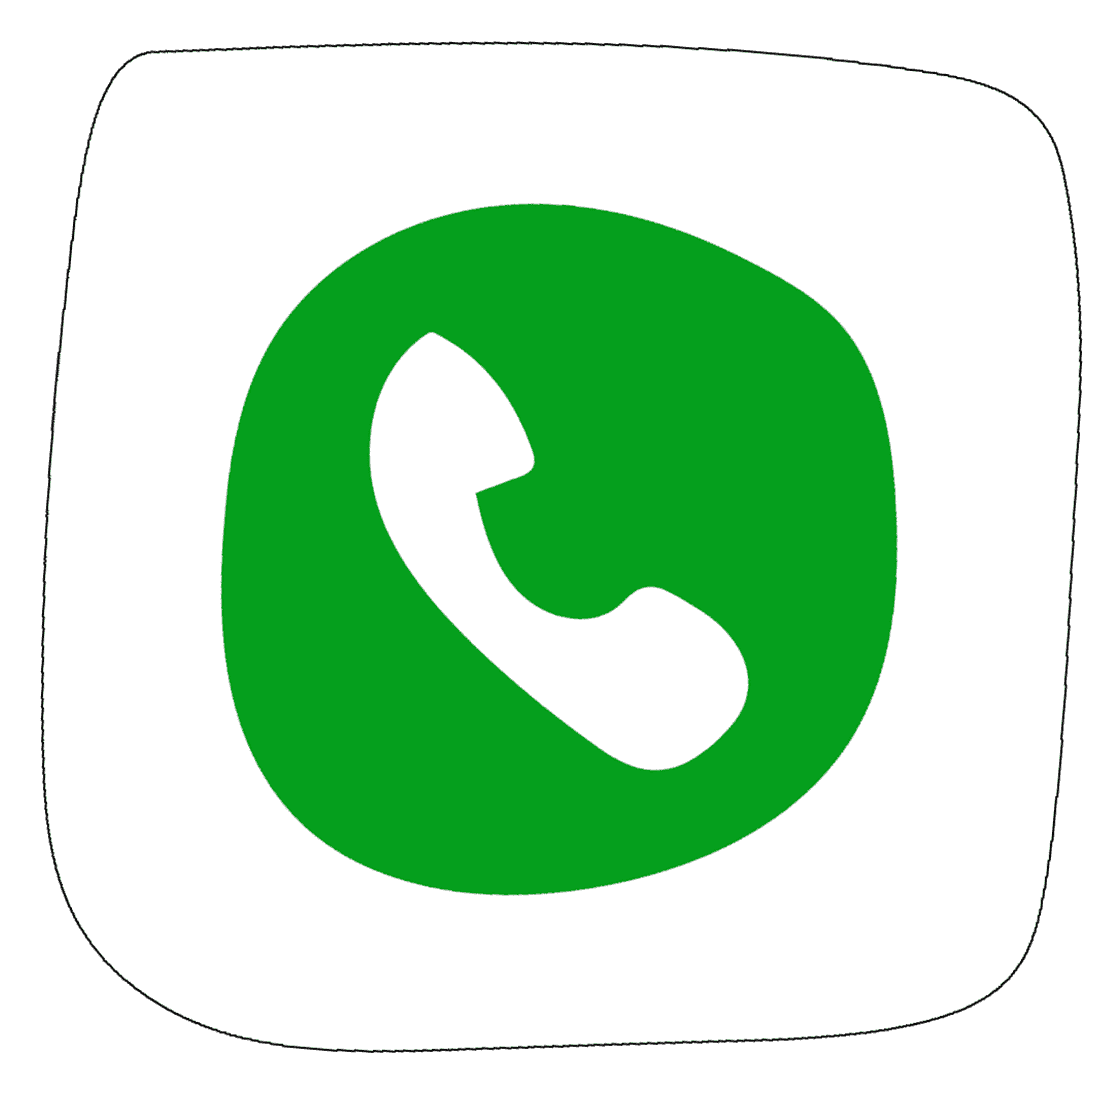 Adorable Whatsapp logo png - PNGBUY